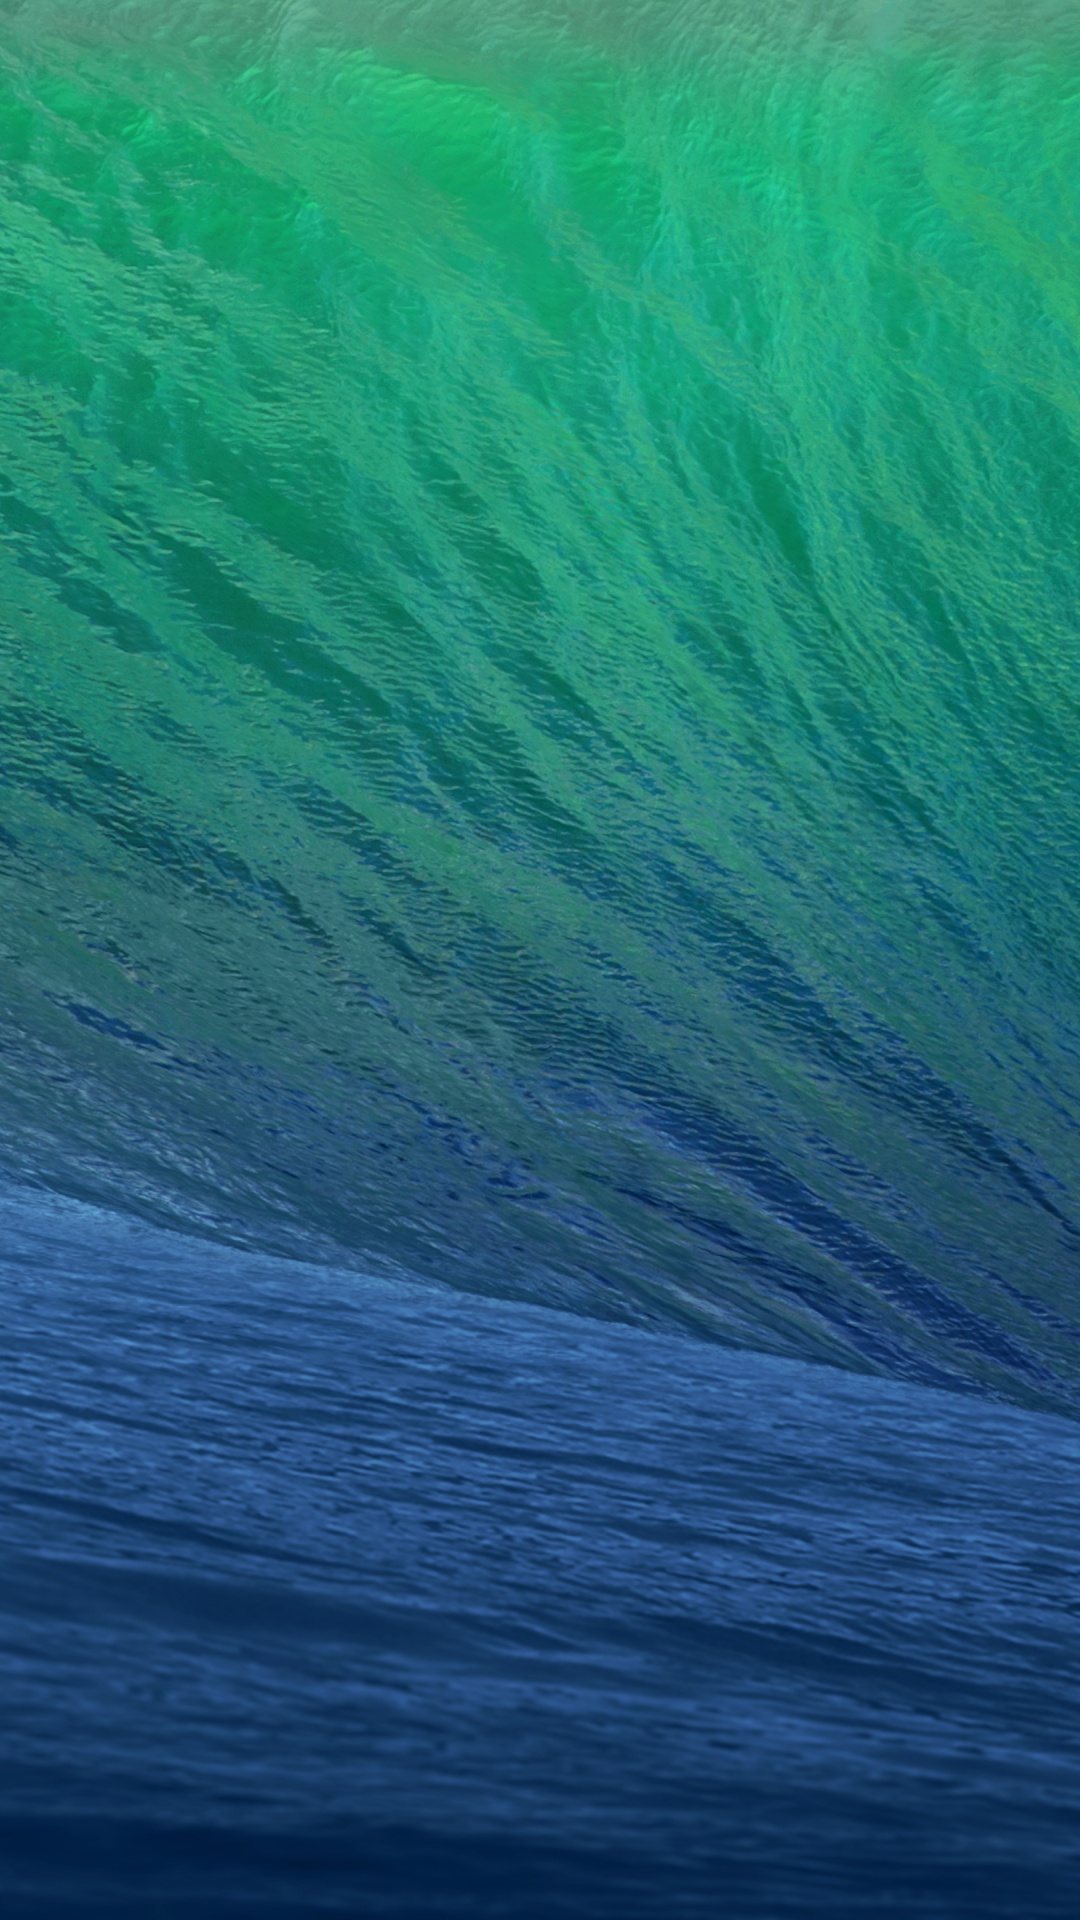 Os X Mavericks Wave Galaxy S4 Wallpaper